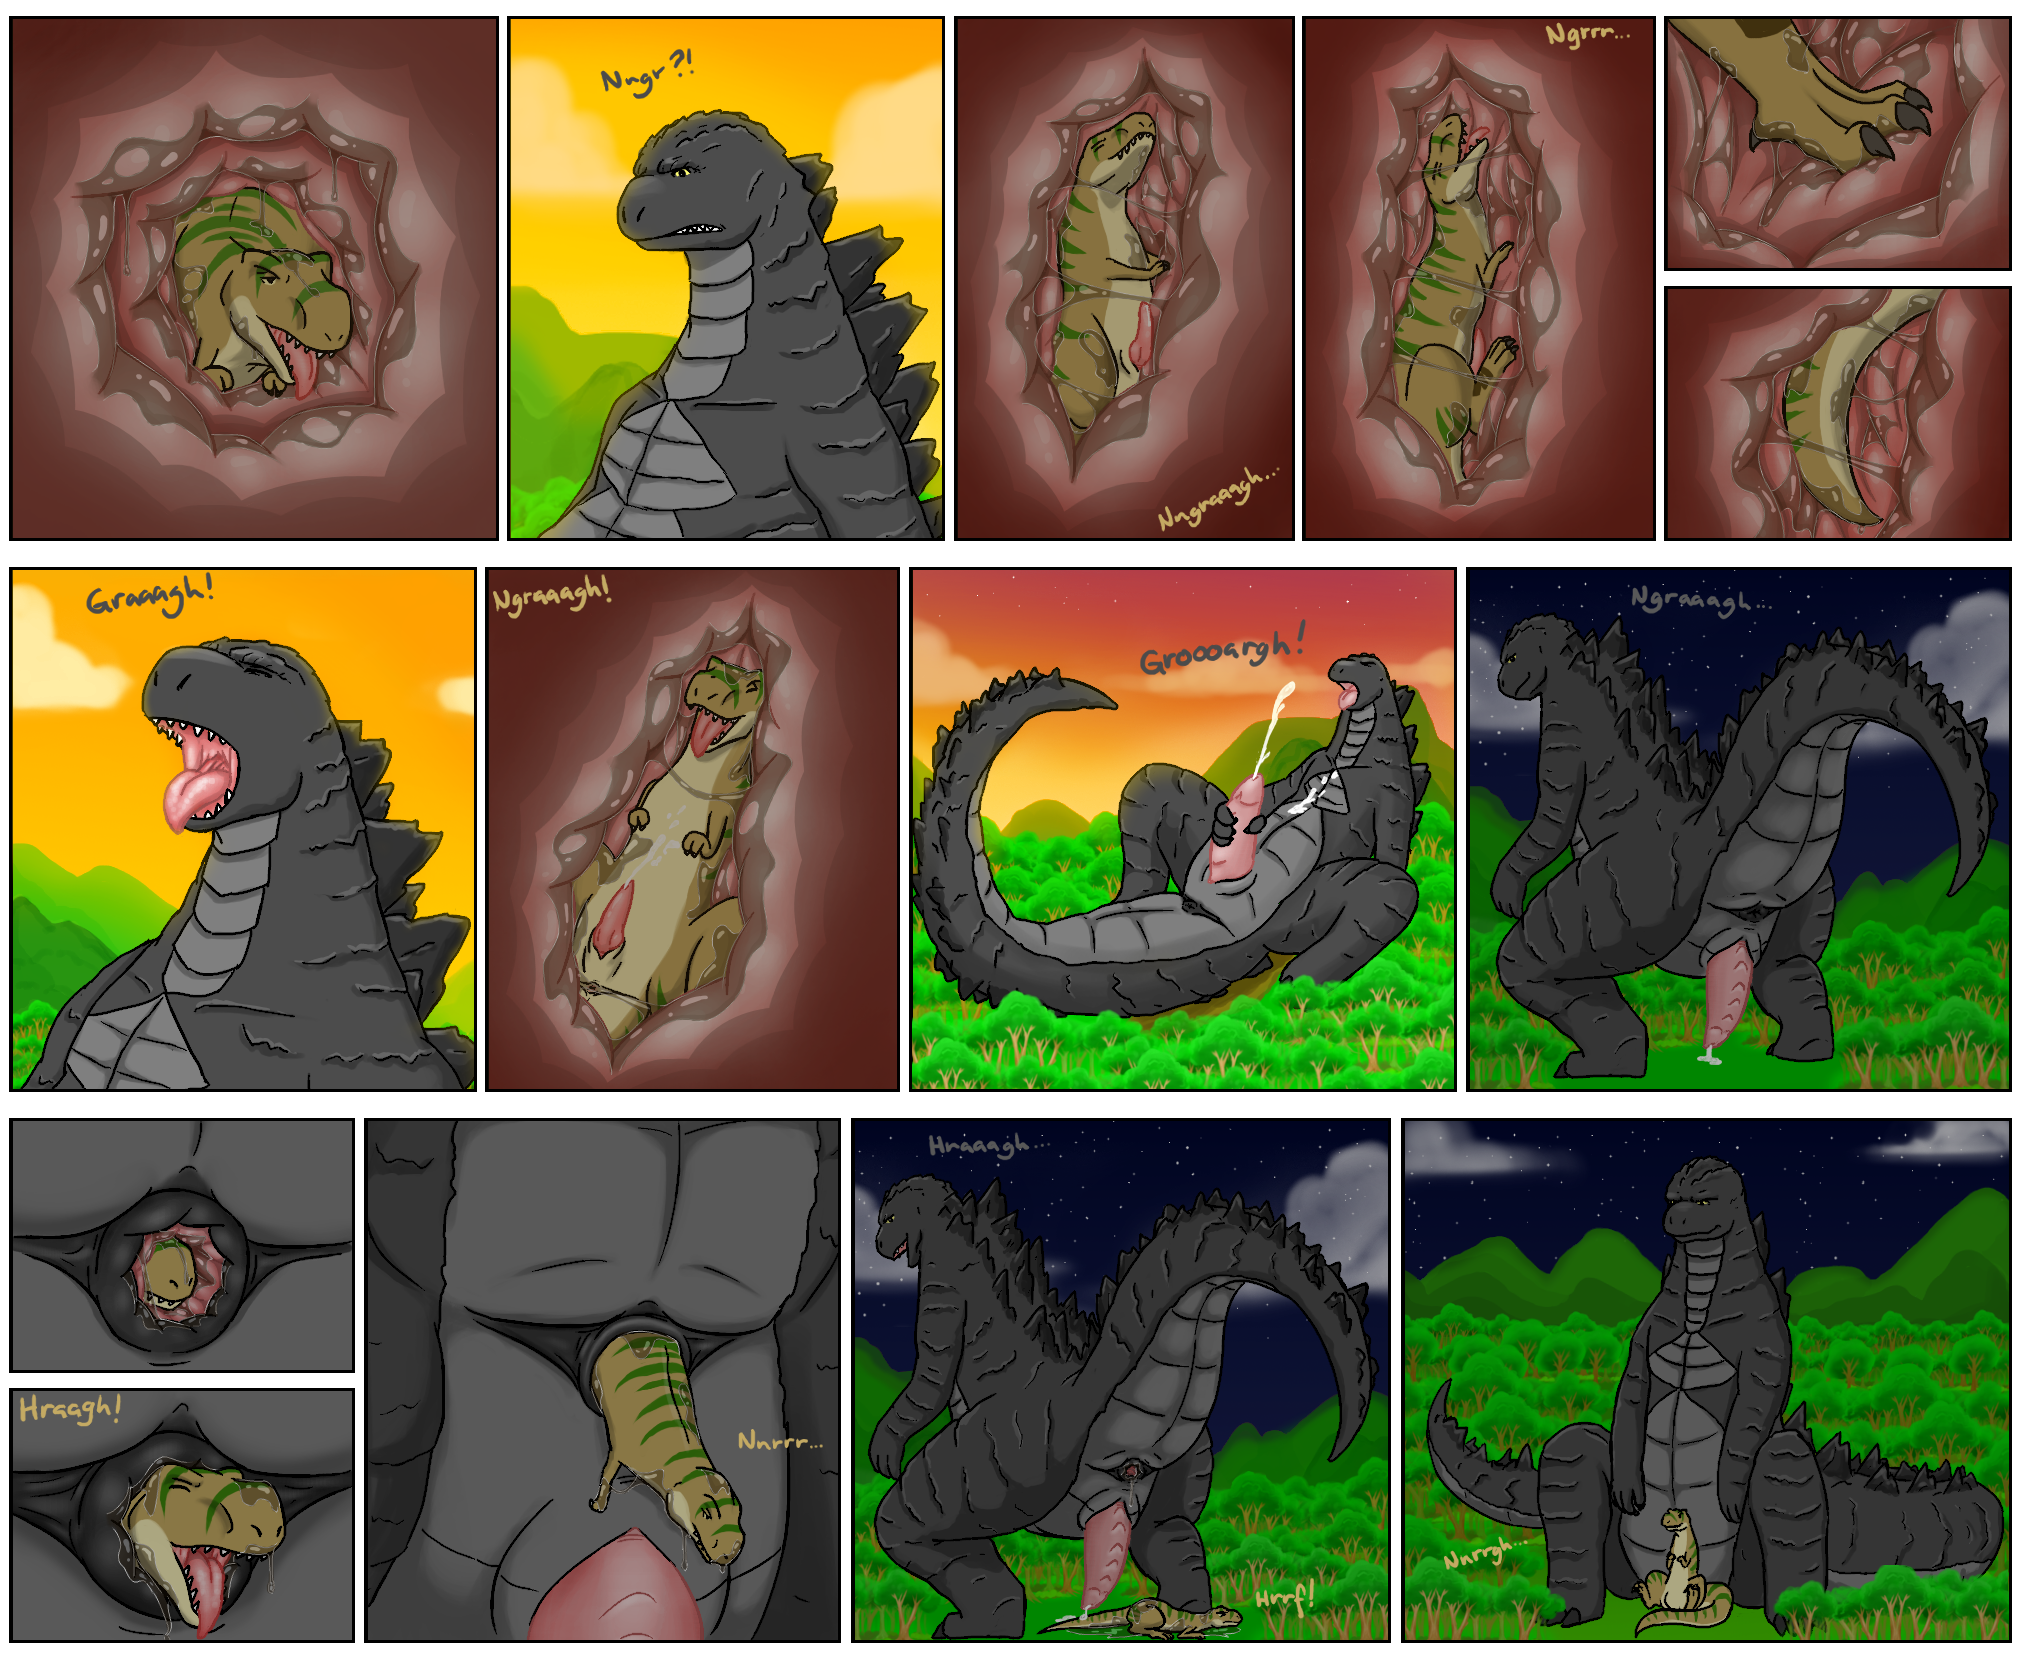 Godzilla anal vore